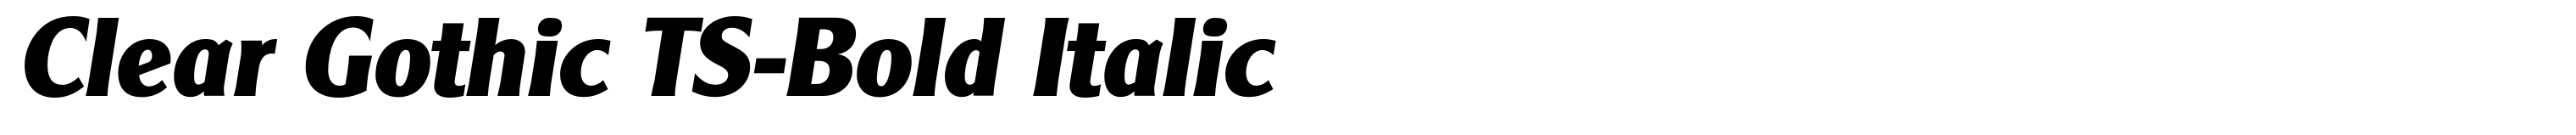 Clear Gothic TS-Bold Italic